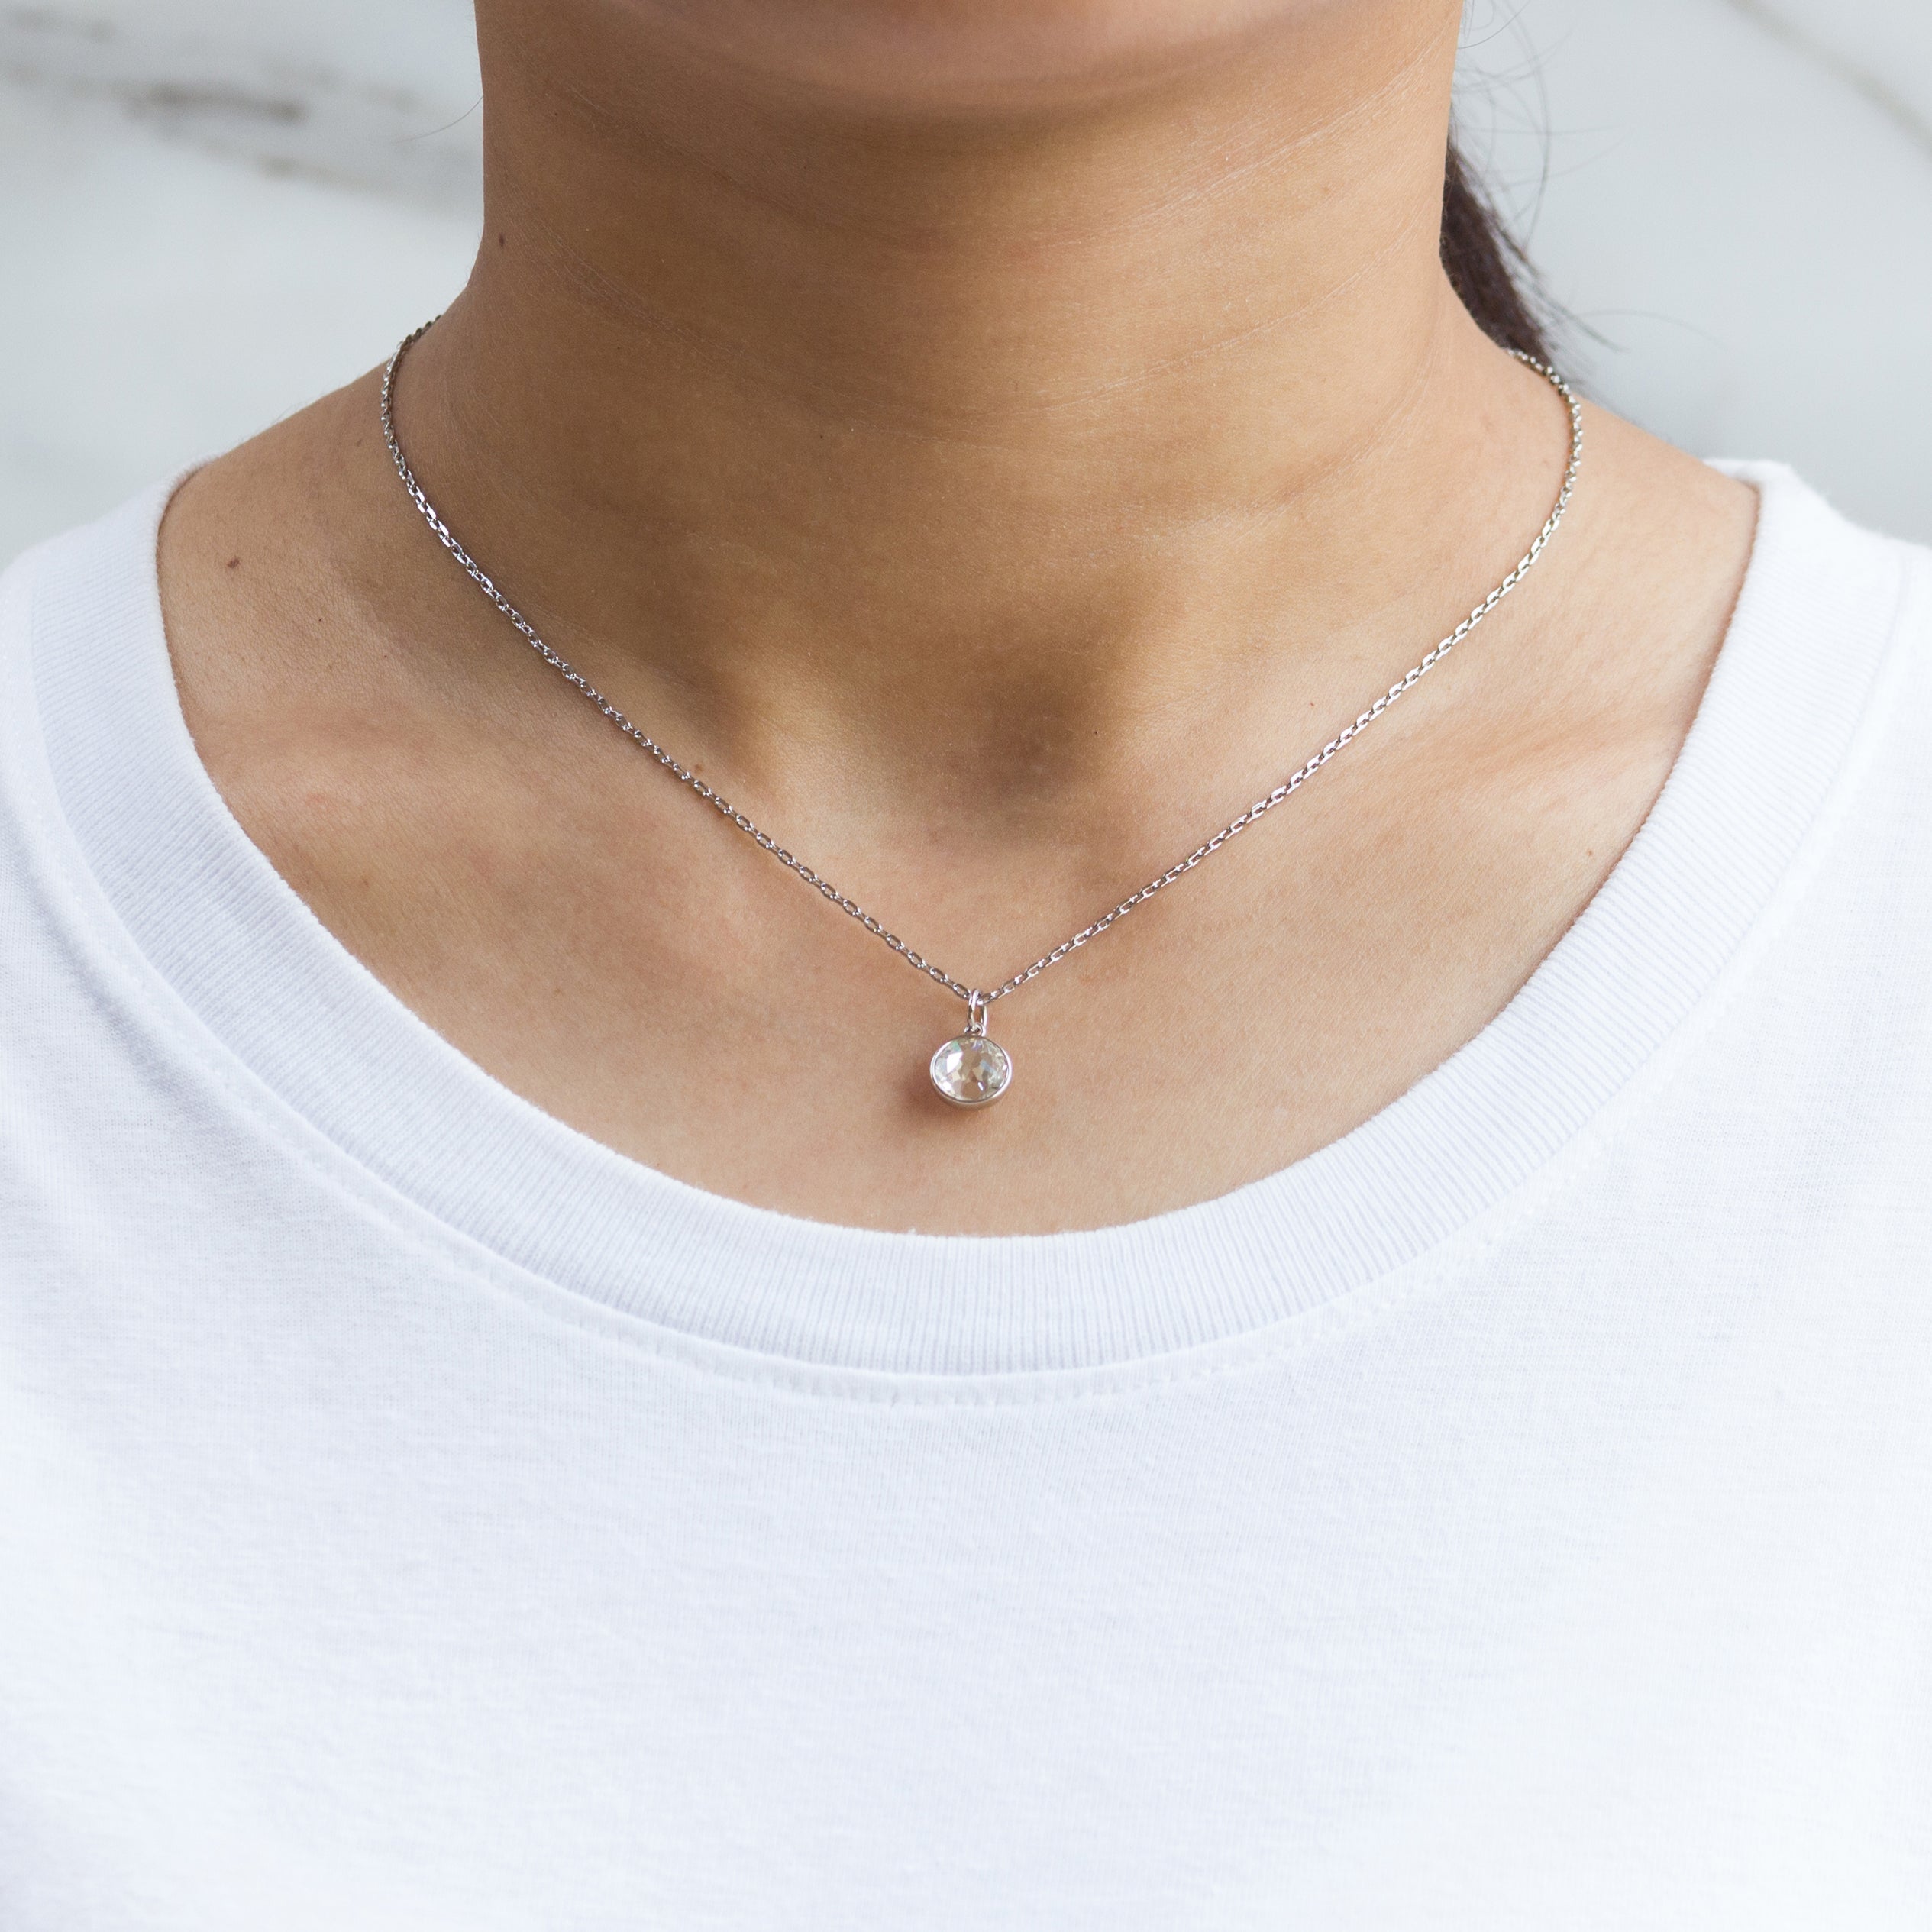 April (Diamond) Birthstone Necklace Created with Zircondia® Crystals